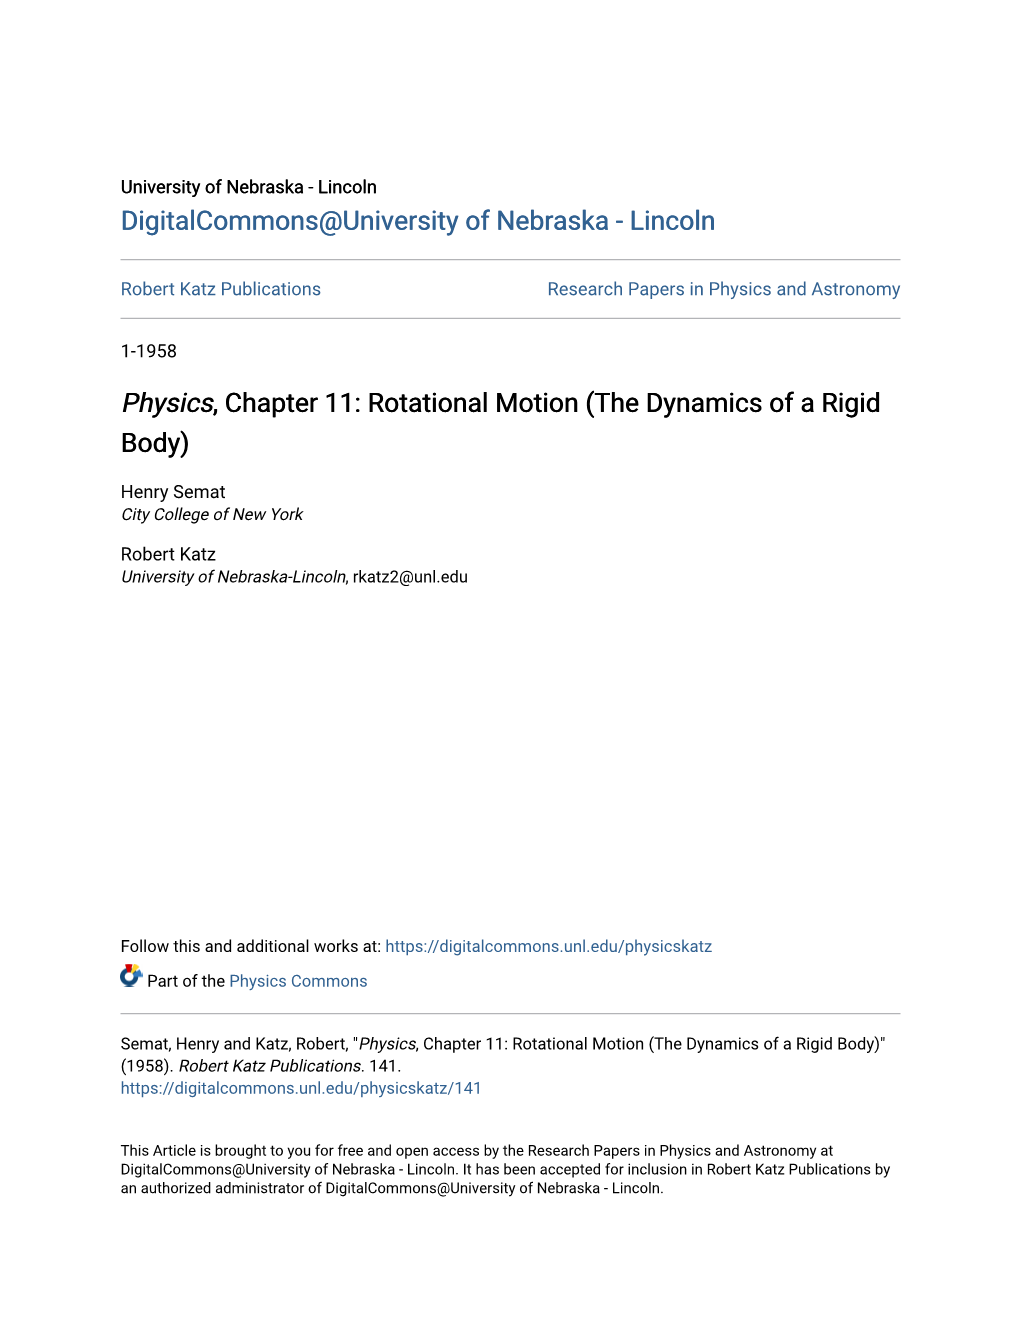 Rotational Motion (The Dynamics of a Rigid Body)